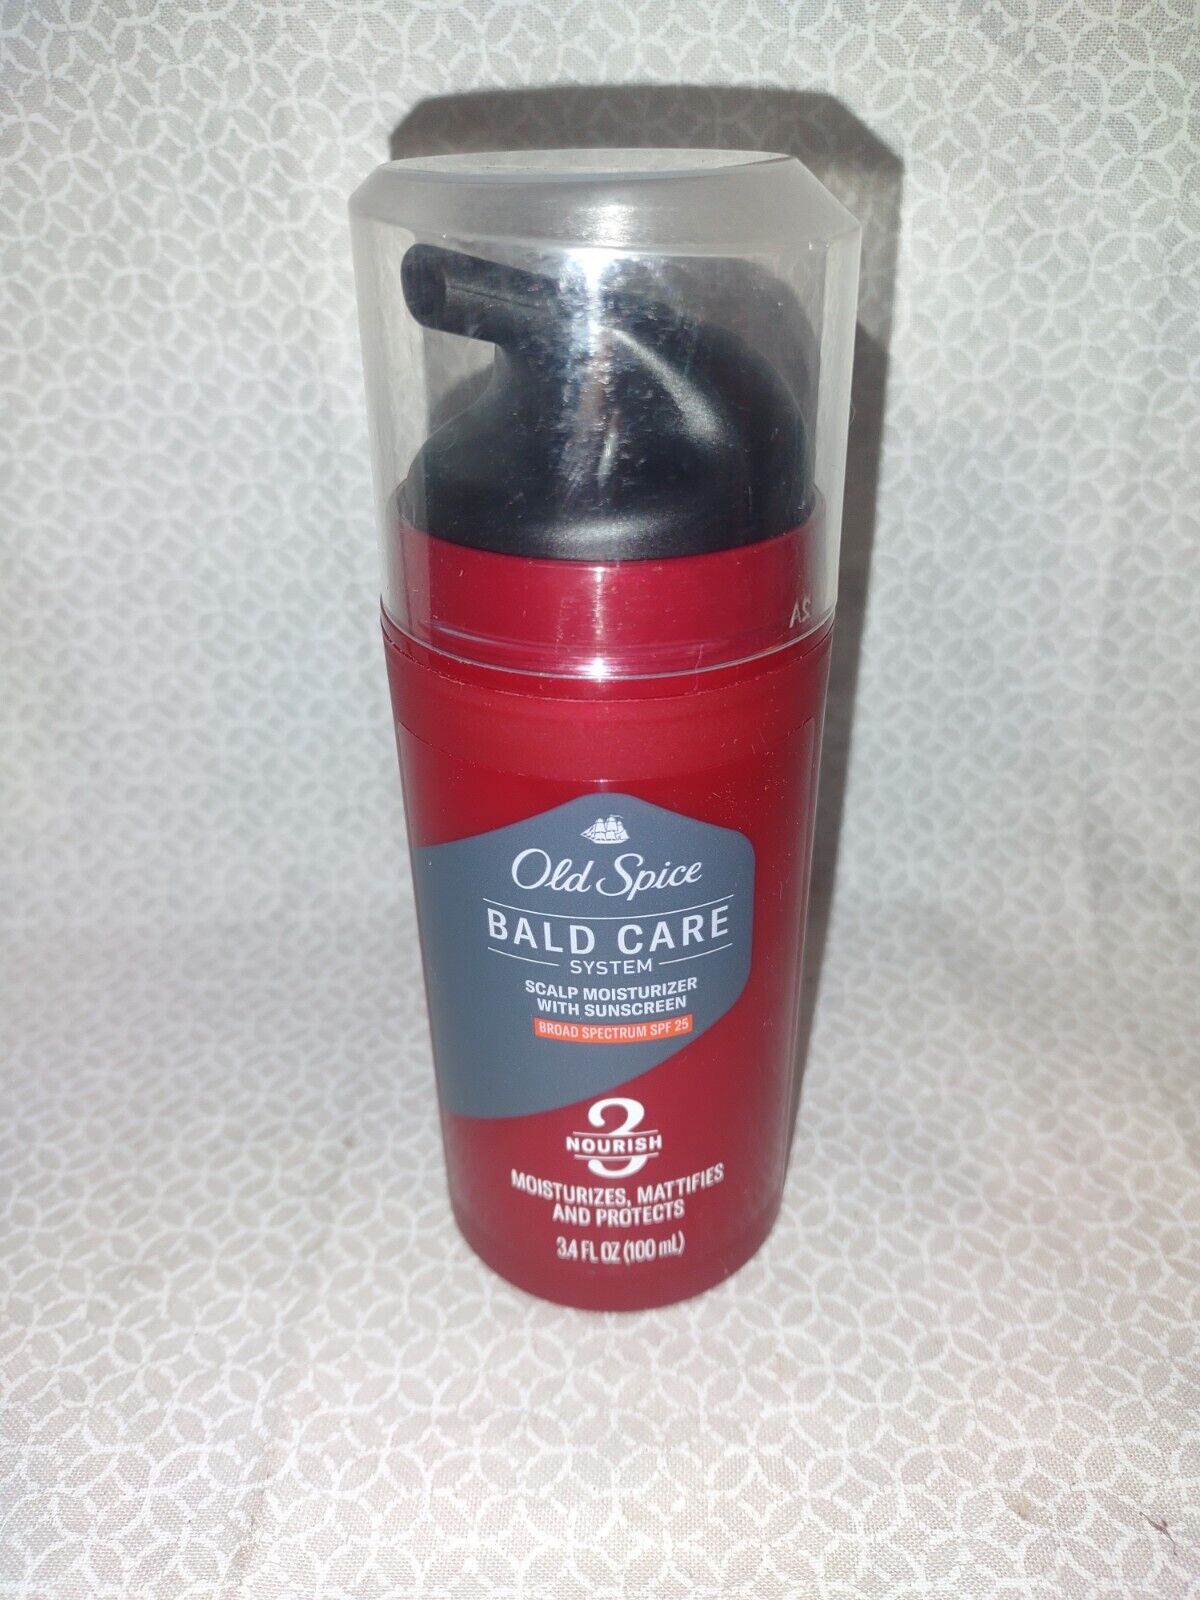 Old Spice Bald Care System - Steps 1-3